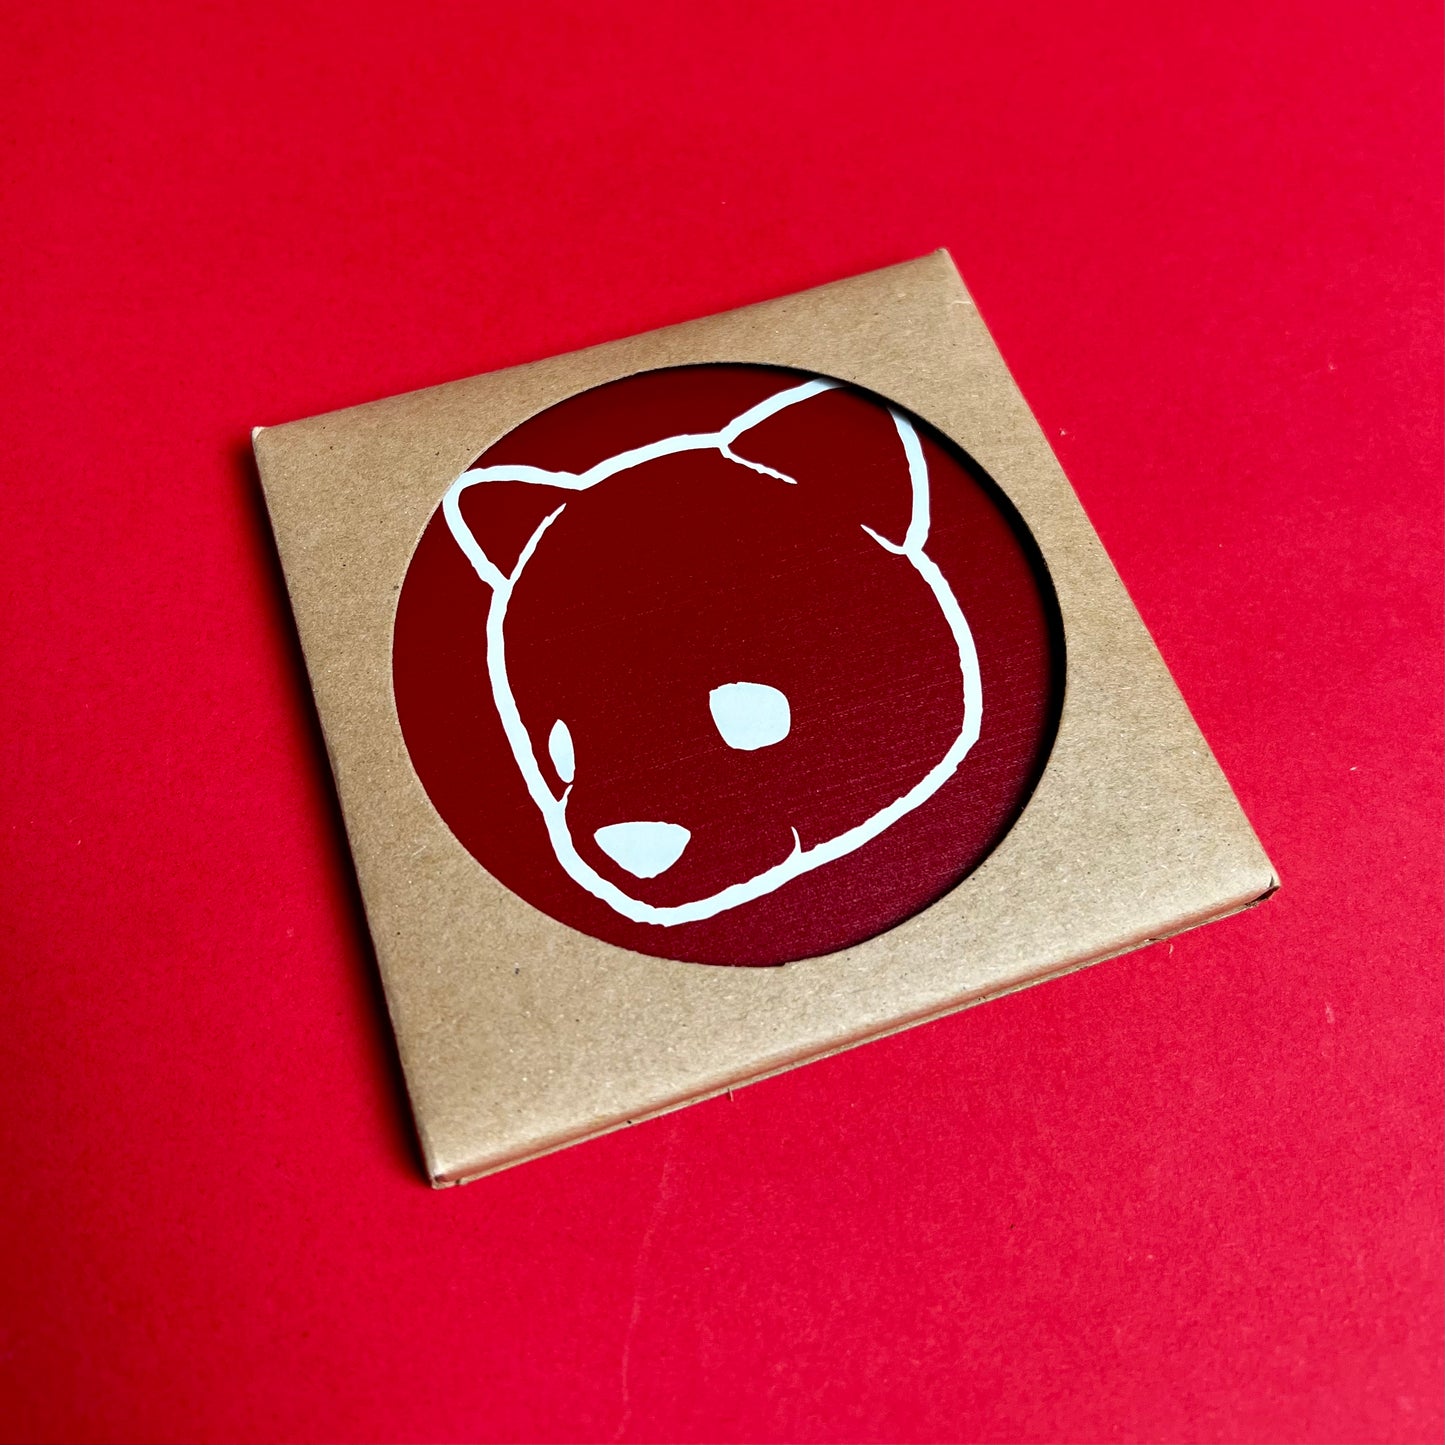 02.020: Bear Logo Ceramic Coaster - "Bloody Edition" by Luke Chueh